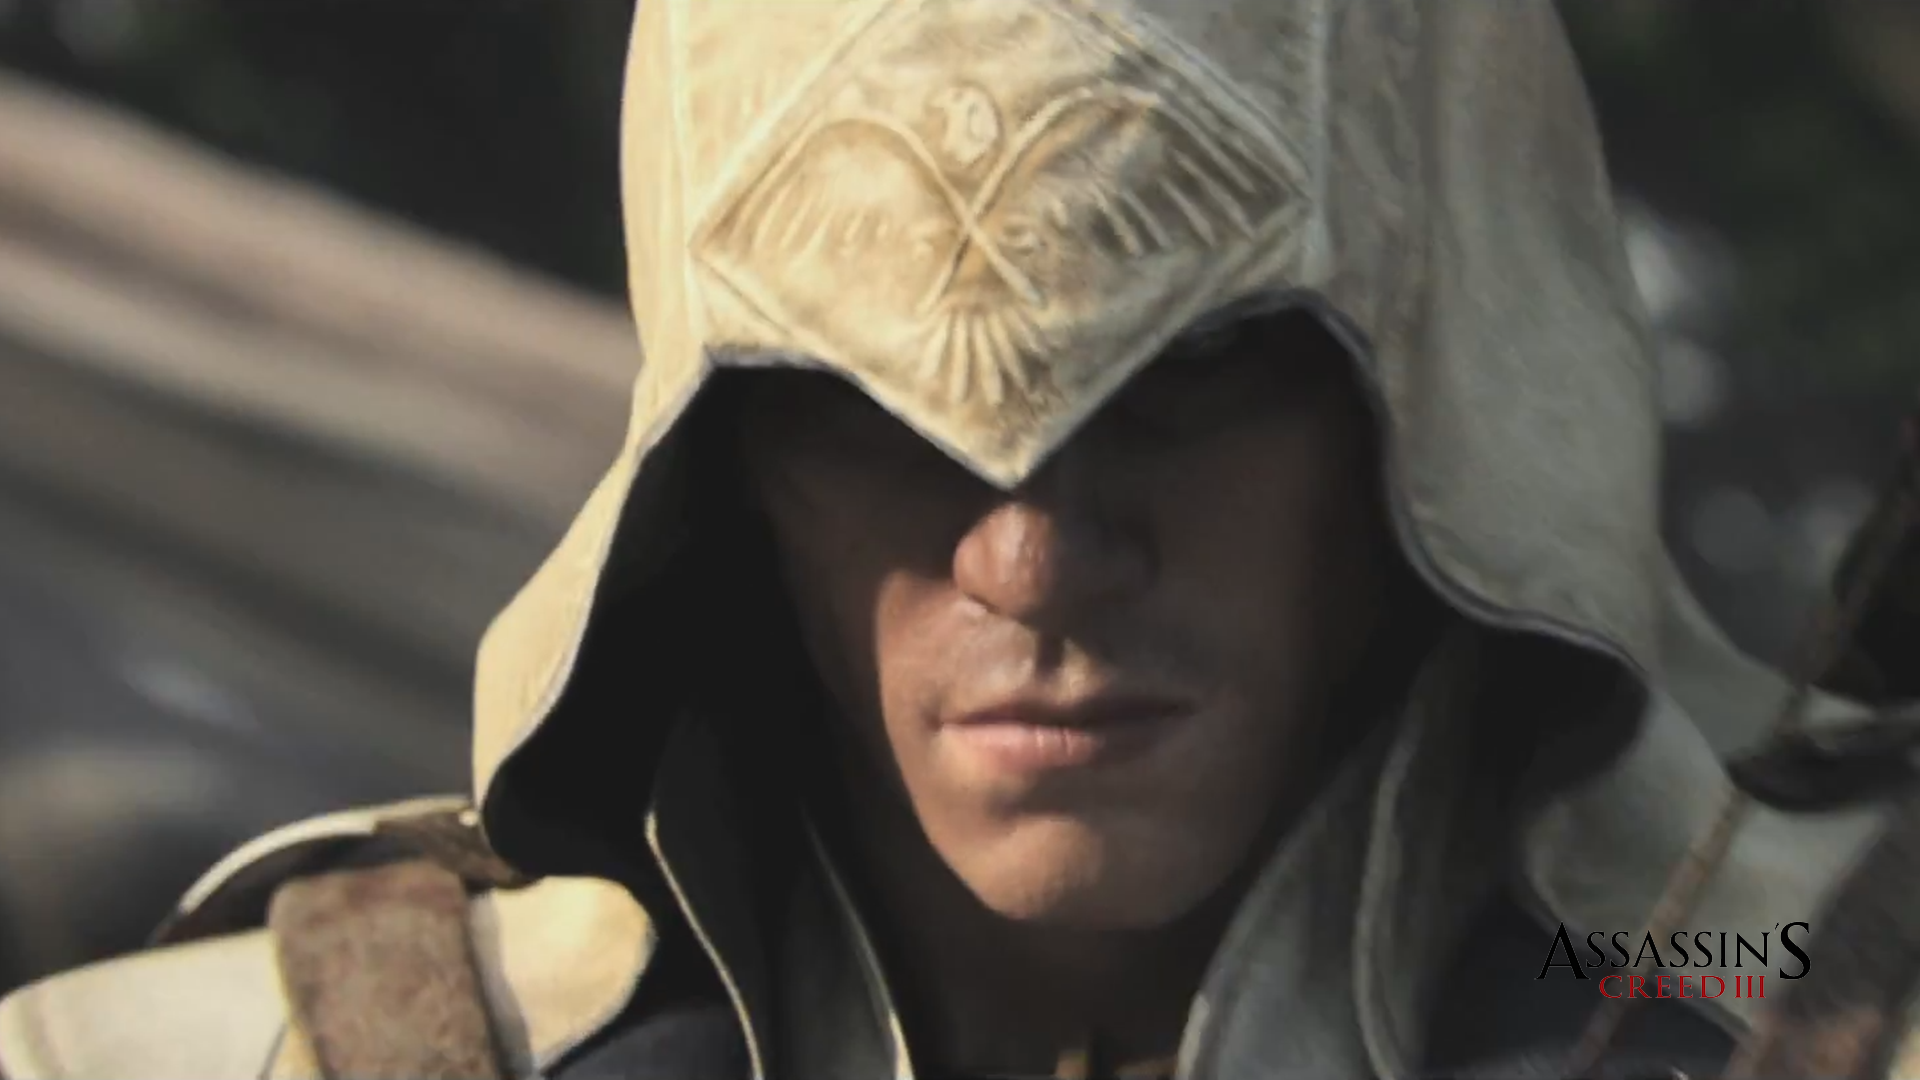 Assassin's Creed III - The Assassin's Wallpaper (32608279) - Fanpop